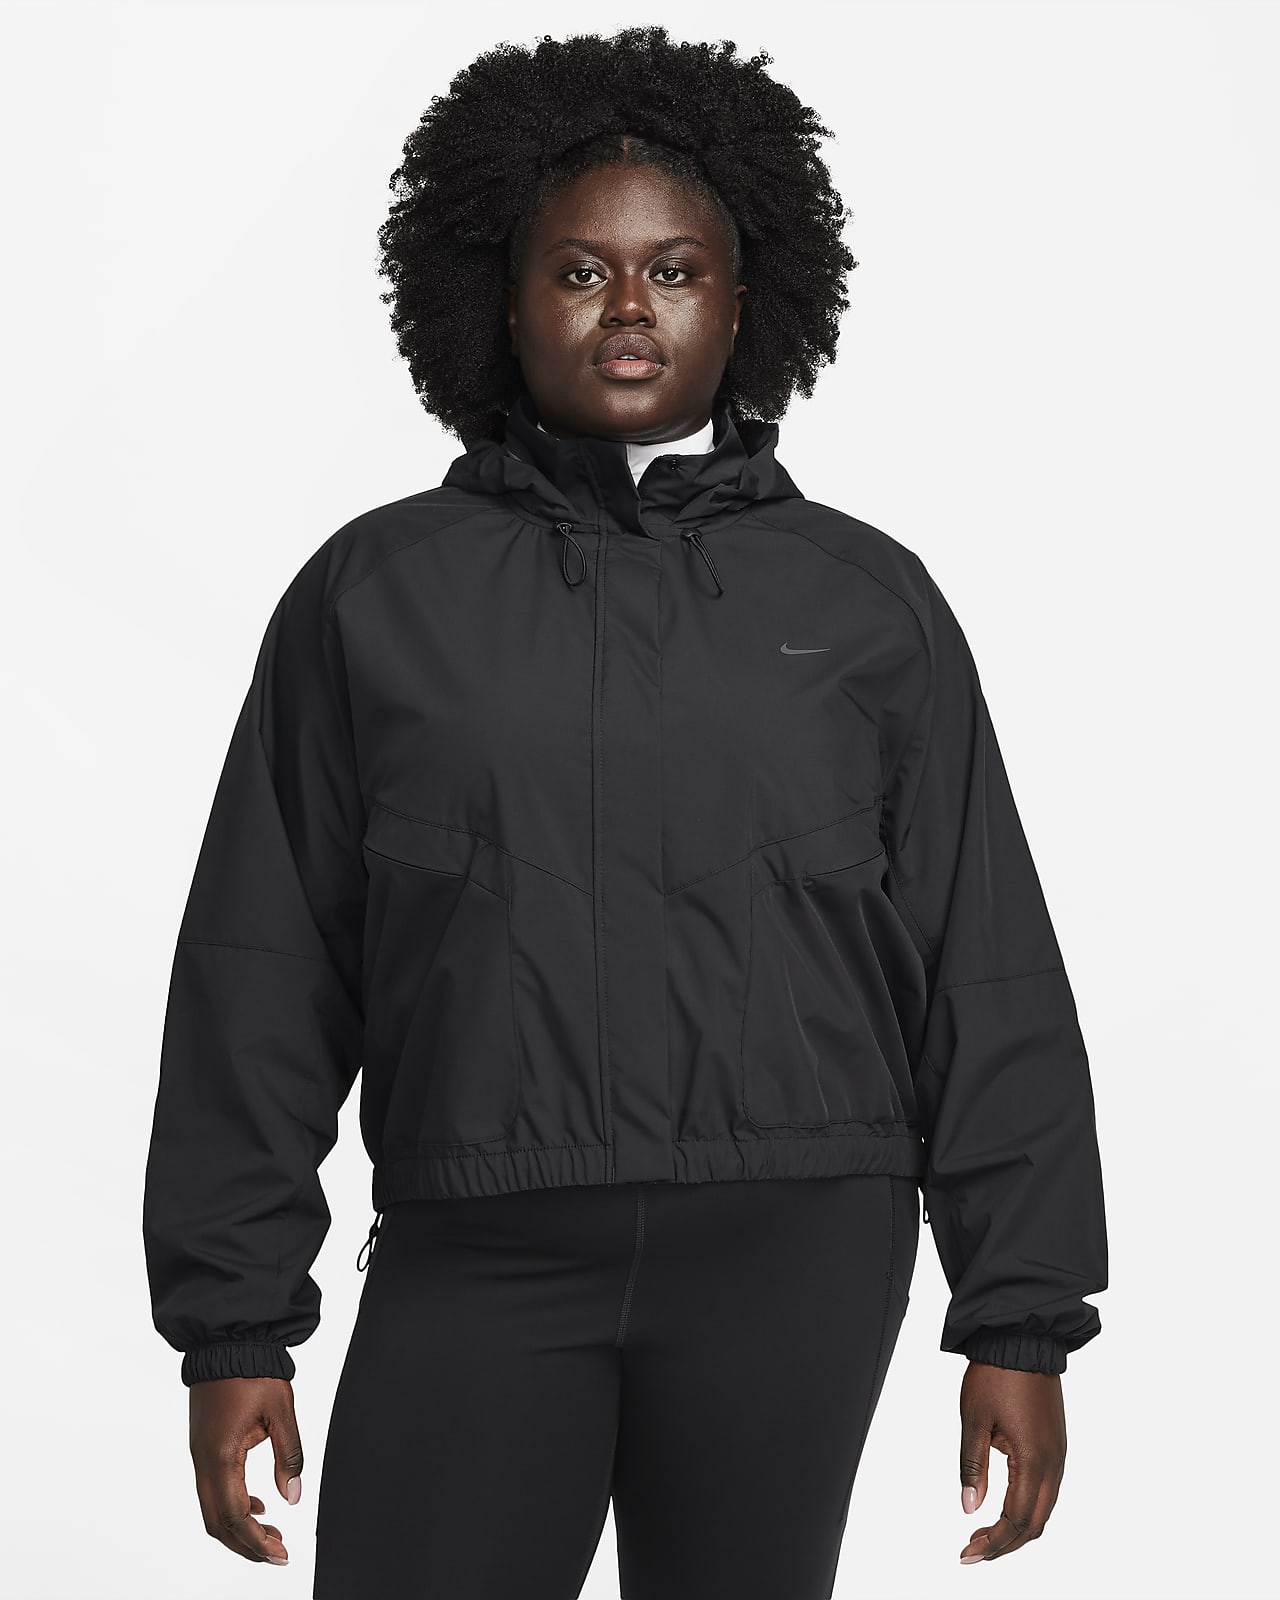 Nike Los Angeles Sparks WNBA Basketball Women Dri-Fit Jersey Jacket X-Large  Tall | eBay